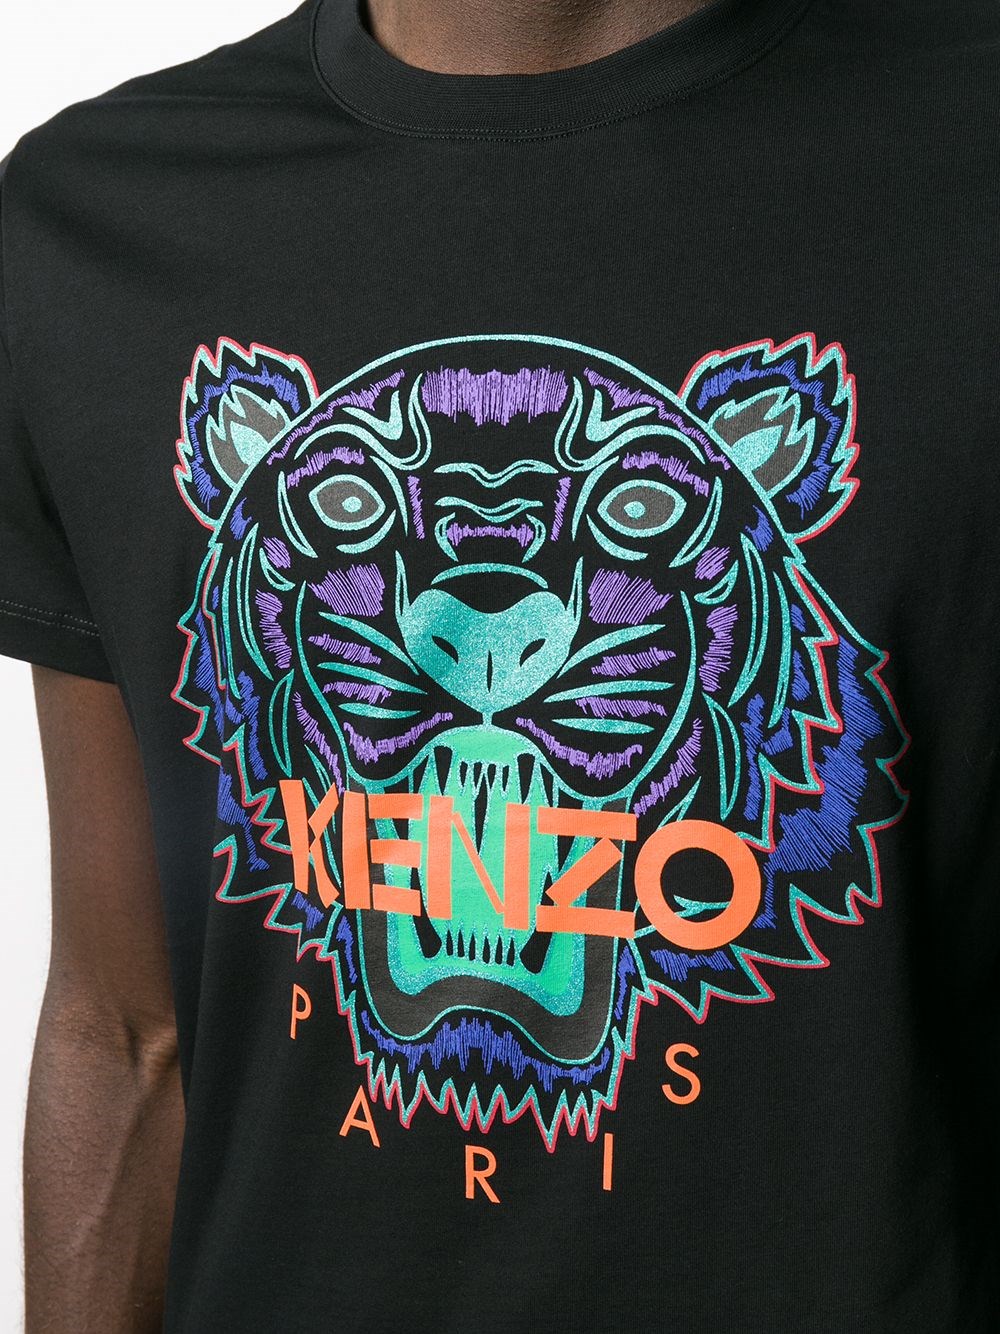 kenzo t shirt original